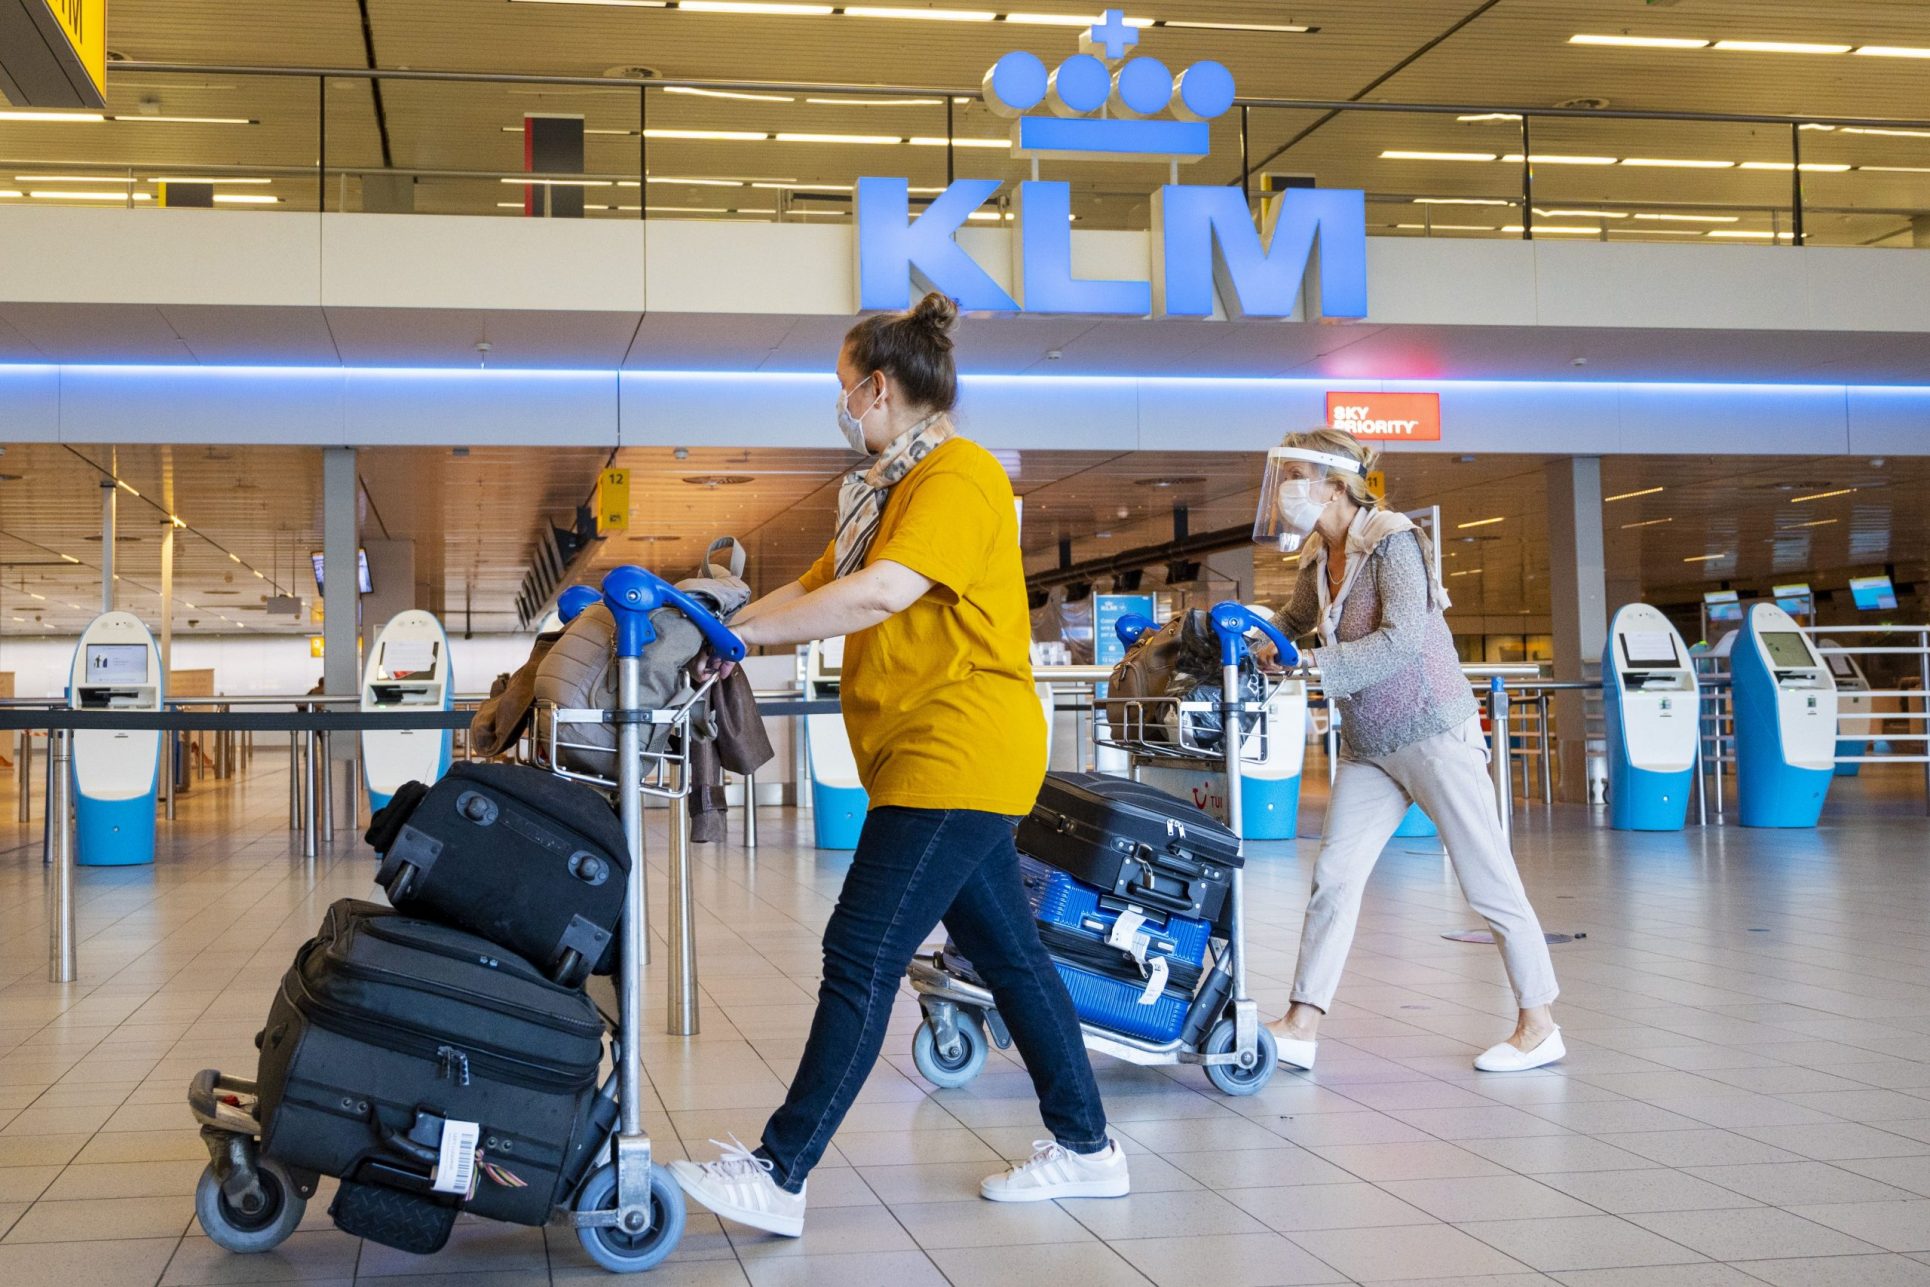 La supervivencia de Air France-KLM “no es automática”, según ministro holandés